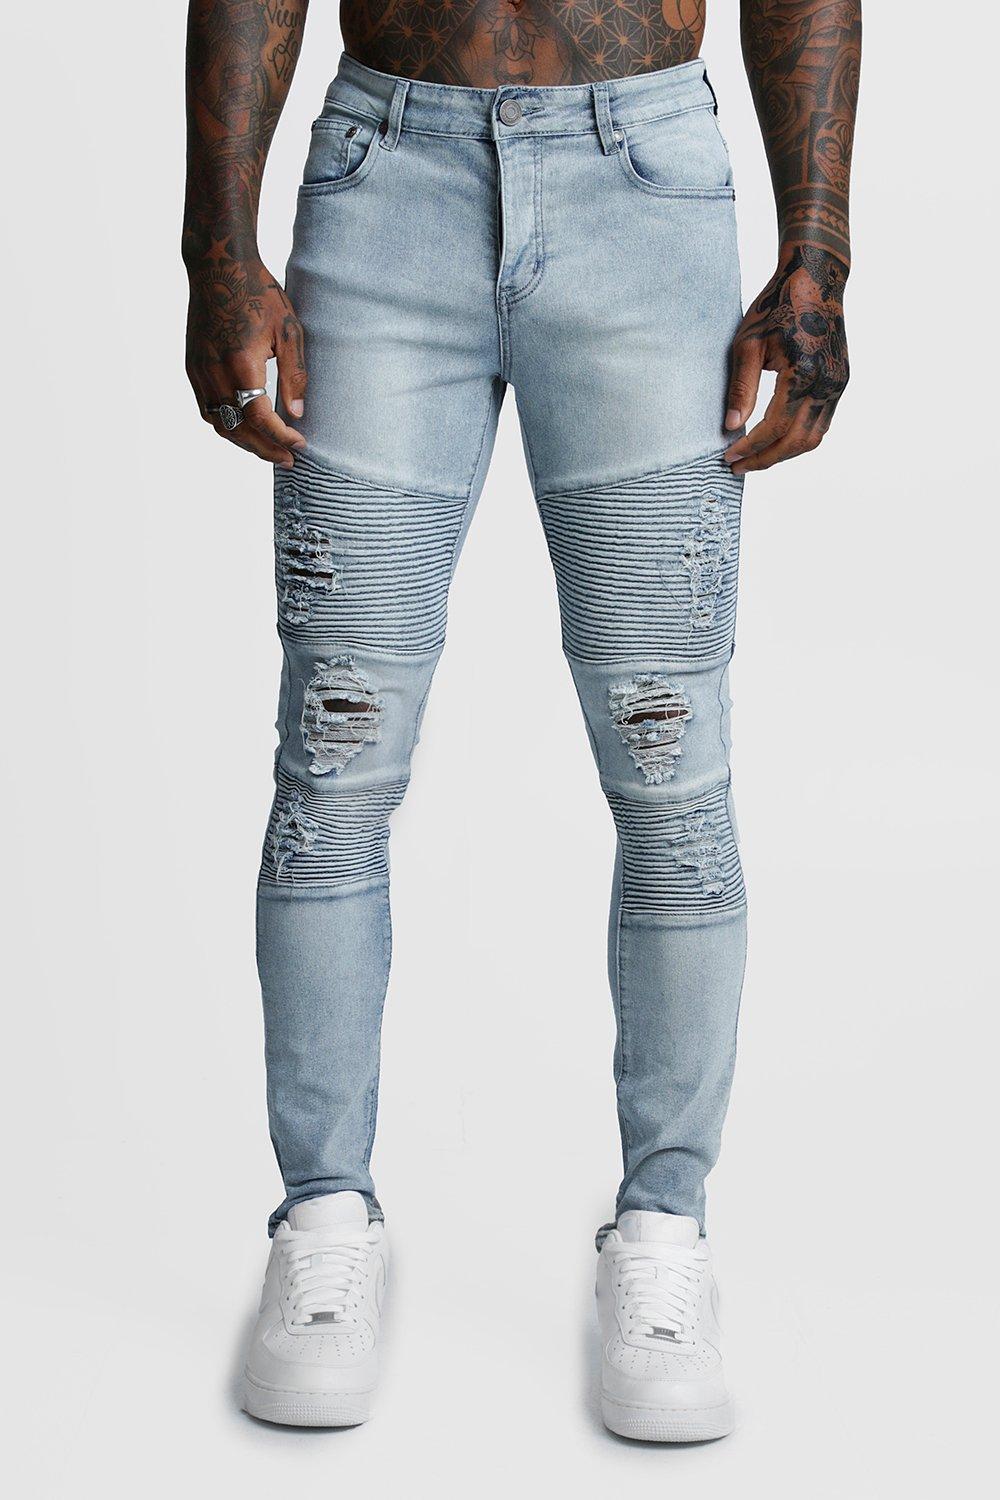 topshop blue skinny jeans